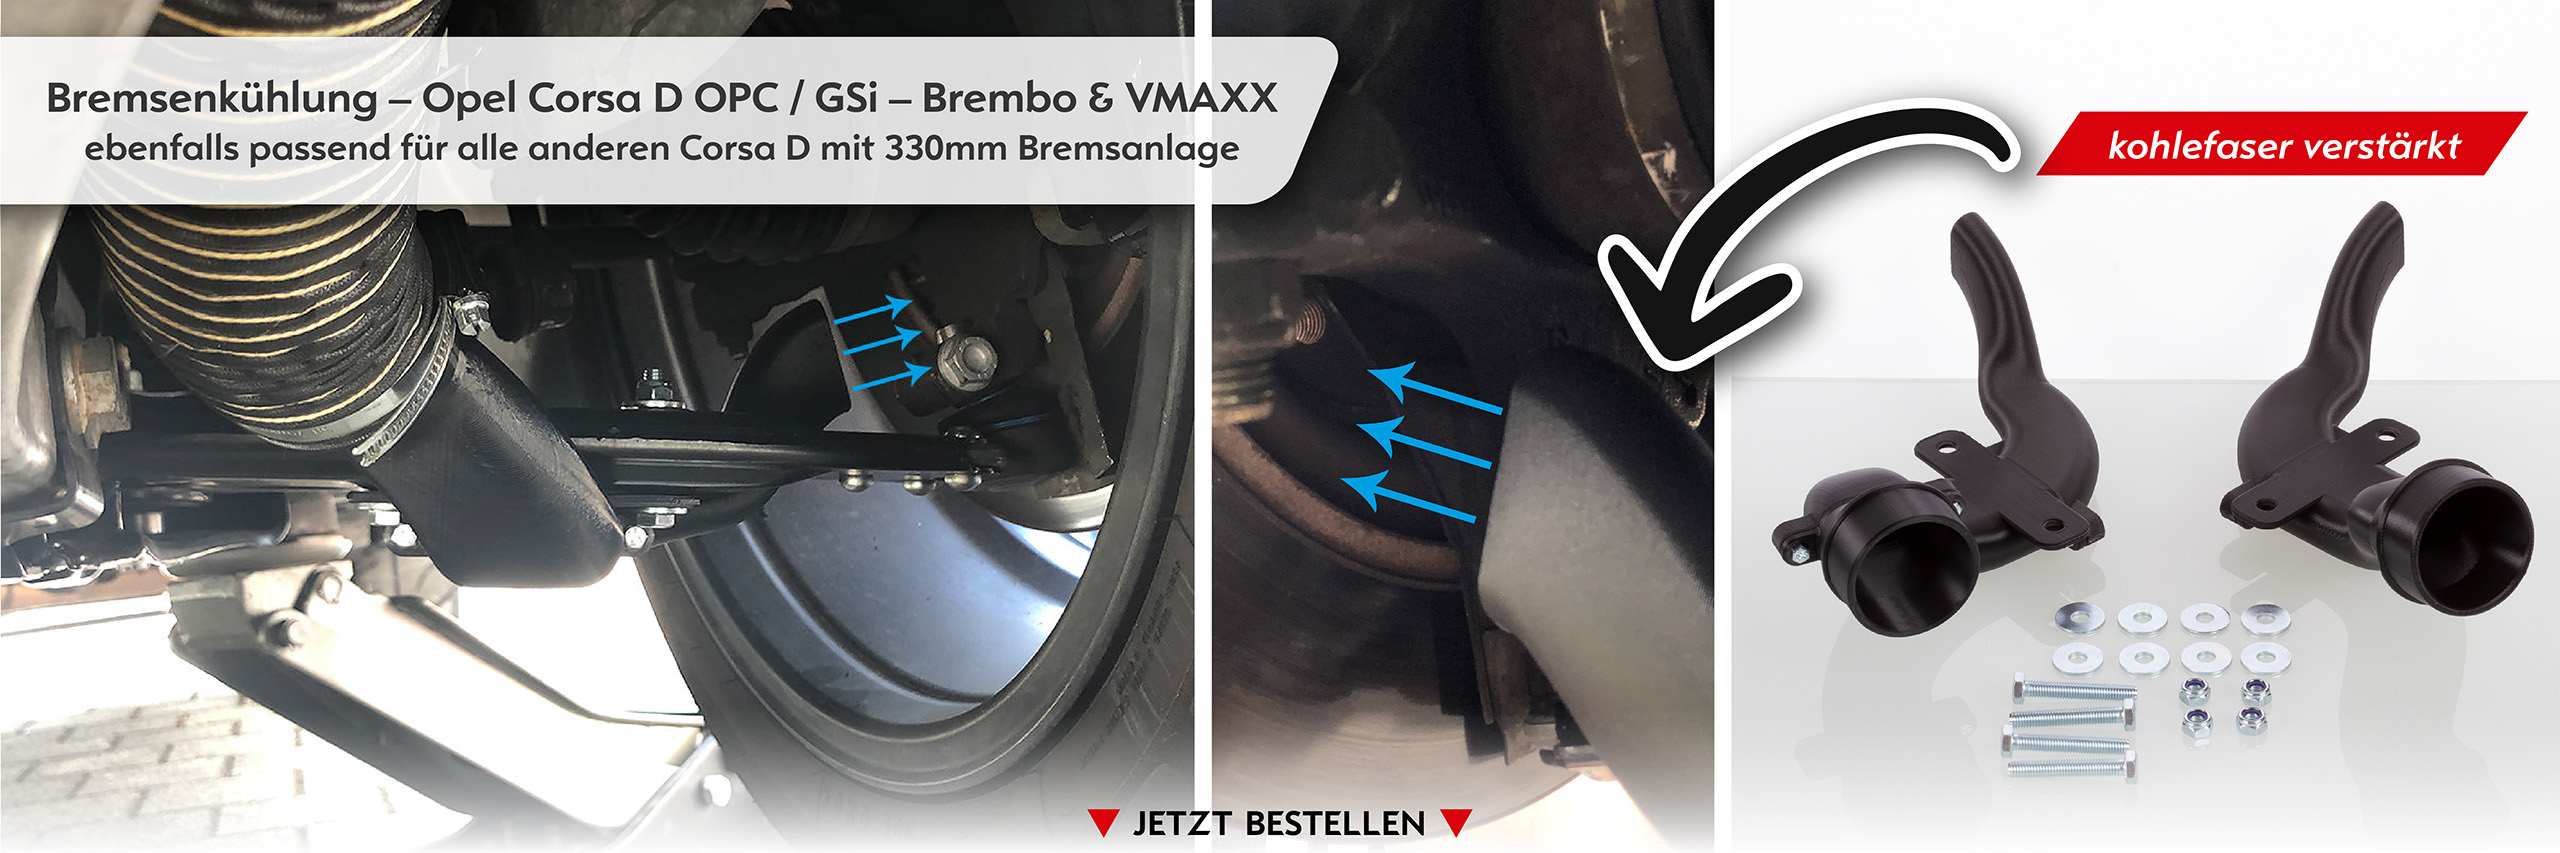 Bremsenkühlung – Opel Corsa D OPC Brembo & VMAXX